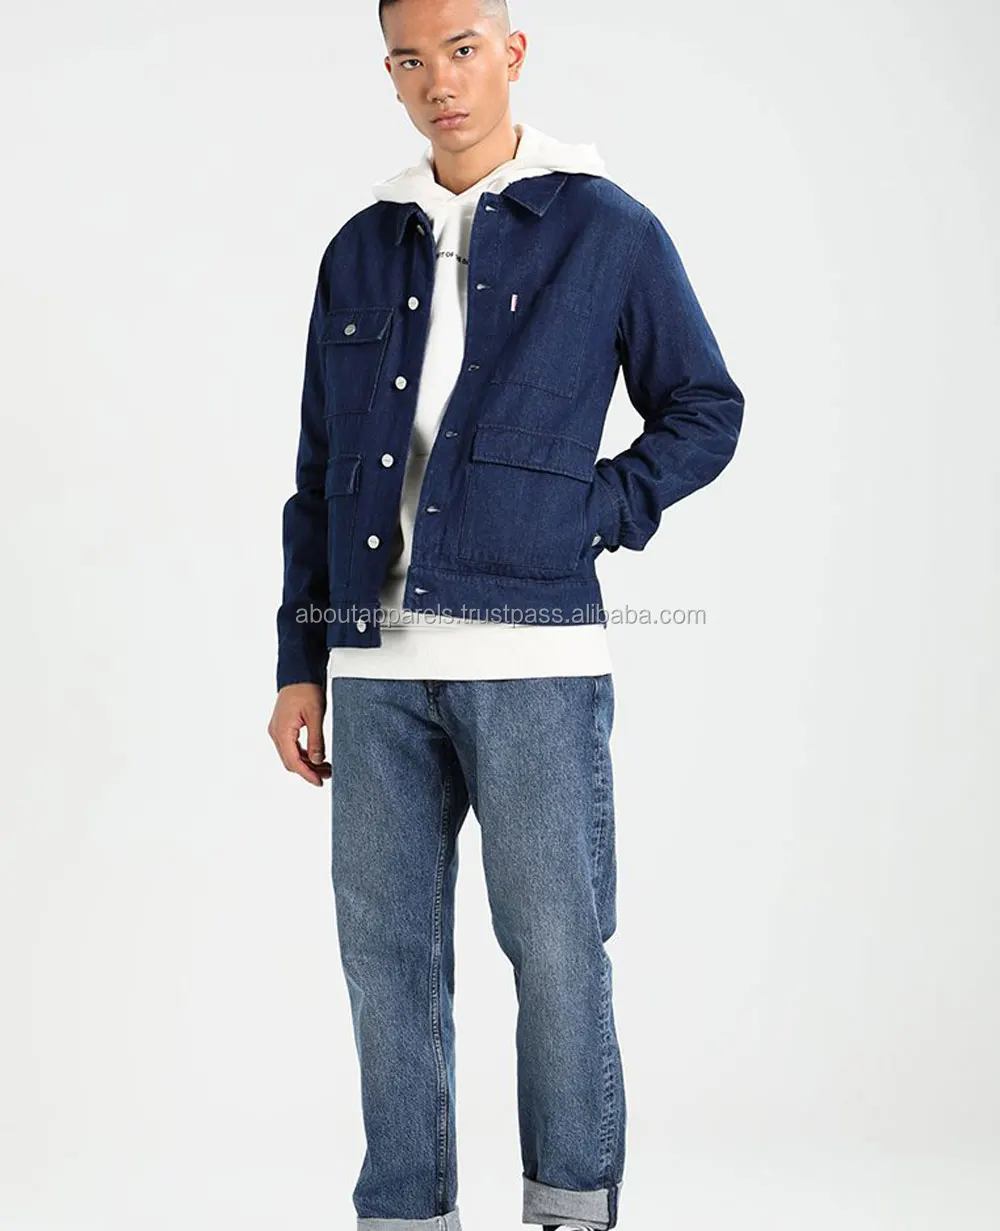 jean jacket men dark blue